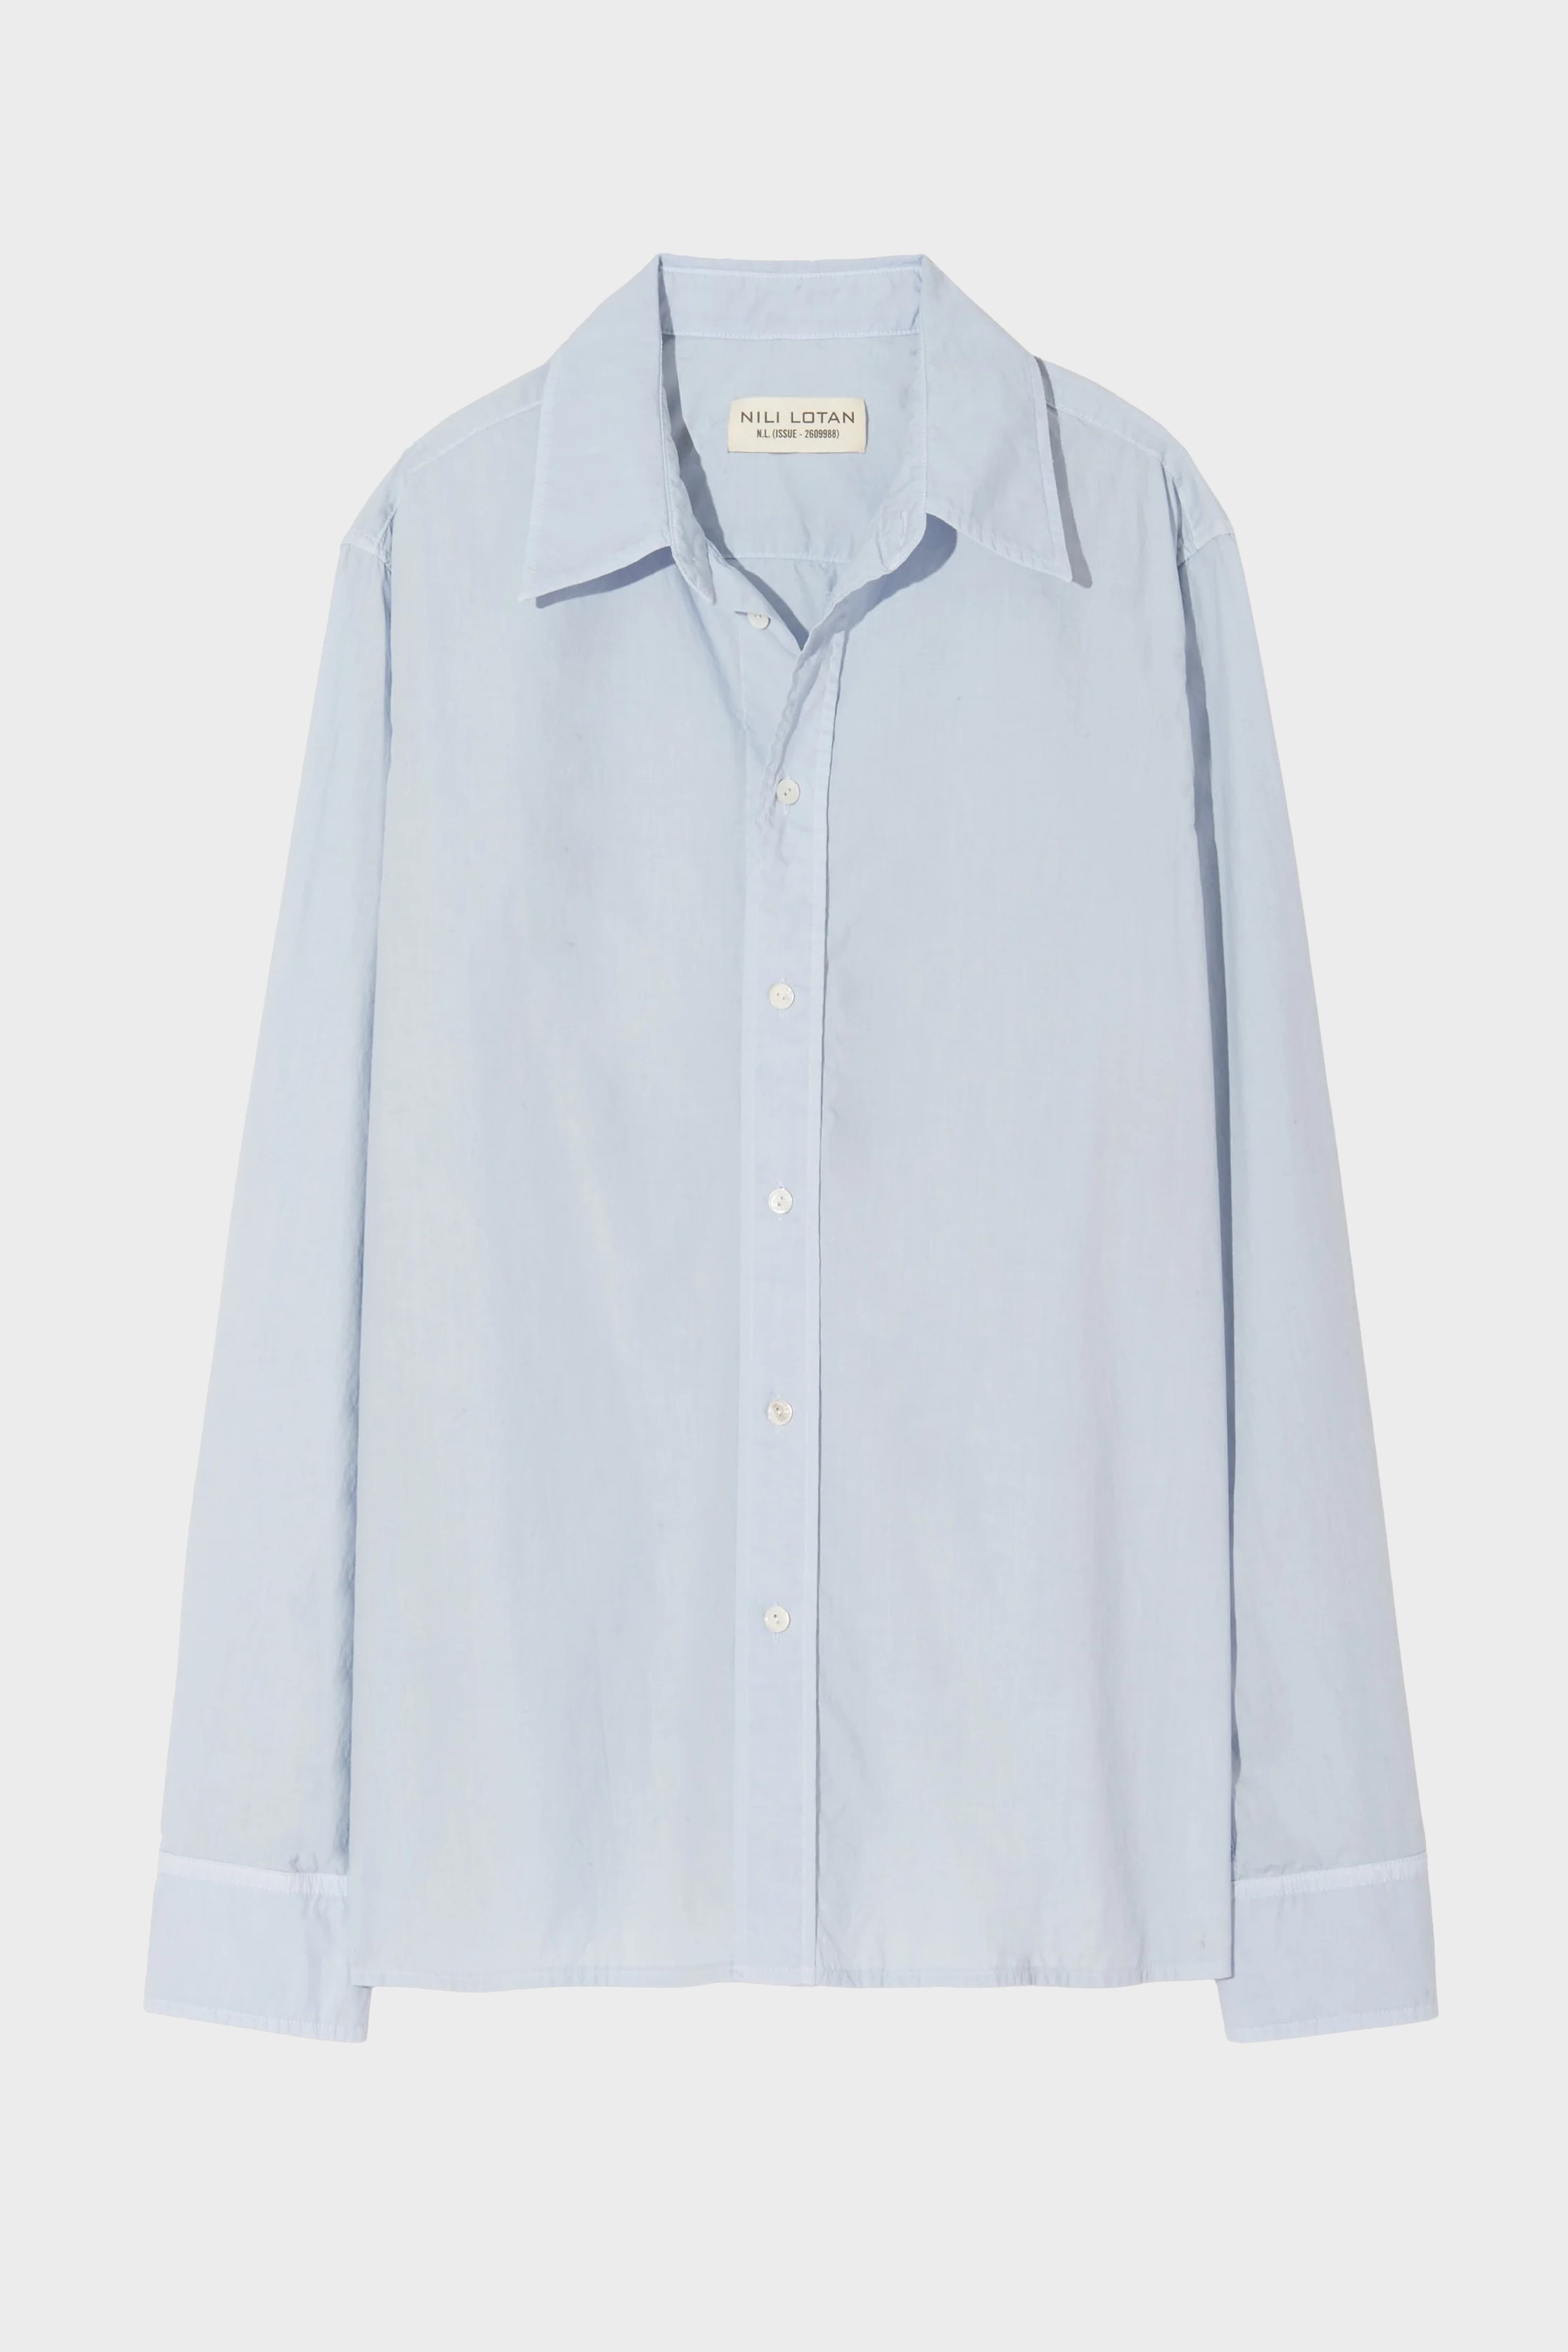 NILI LOTAN Raphael Classic Shirt in Light Blue XS